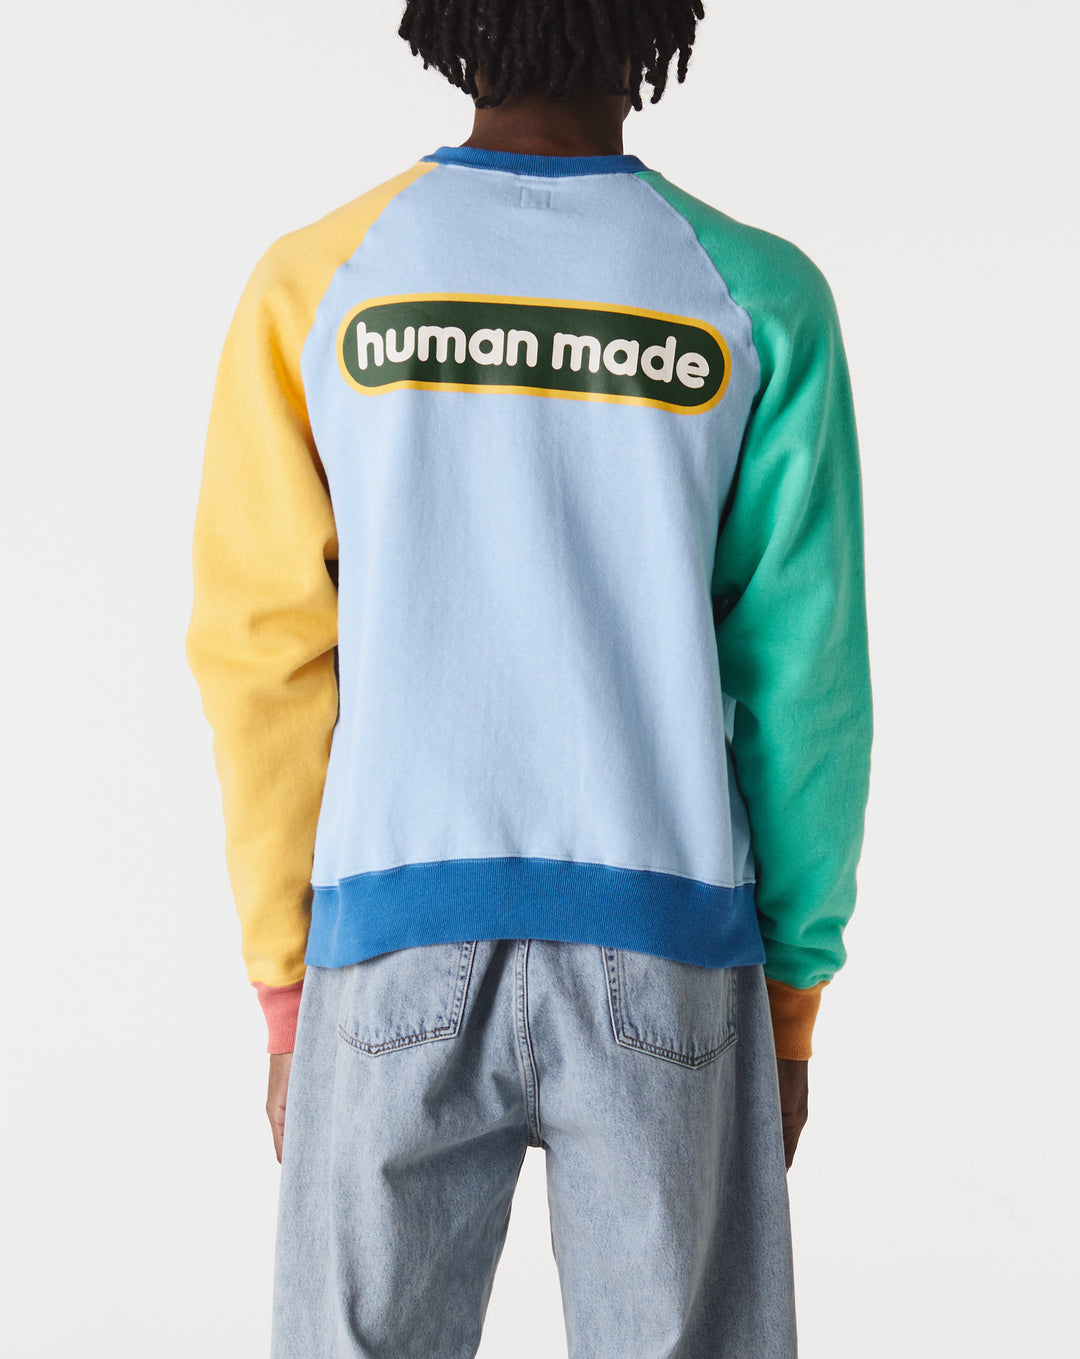 Human Made cold wall graphic print cotton t shirt item  - Cheap Urlfreeze Jordan outlet